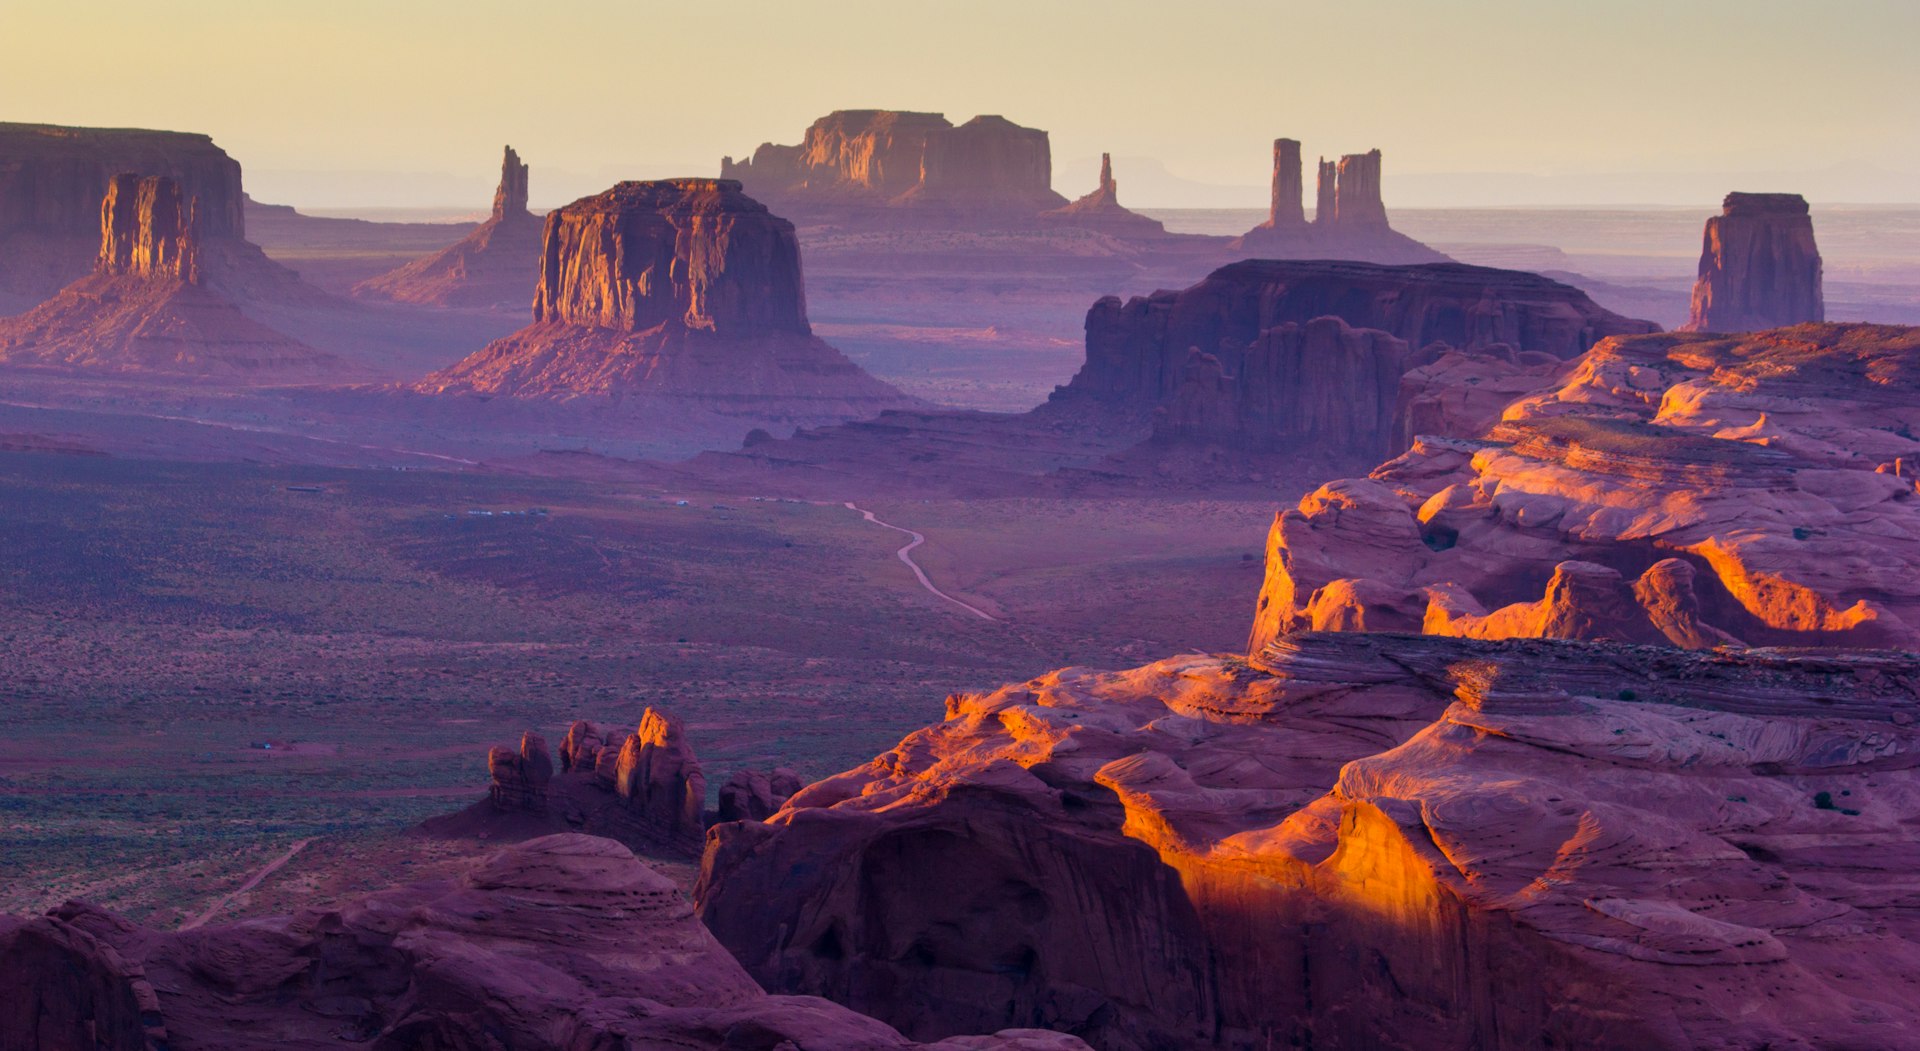 Sunset over rock formations in a desert landscape